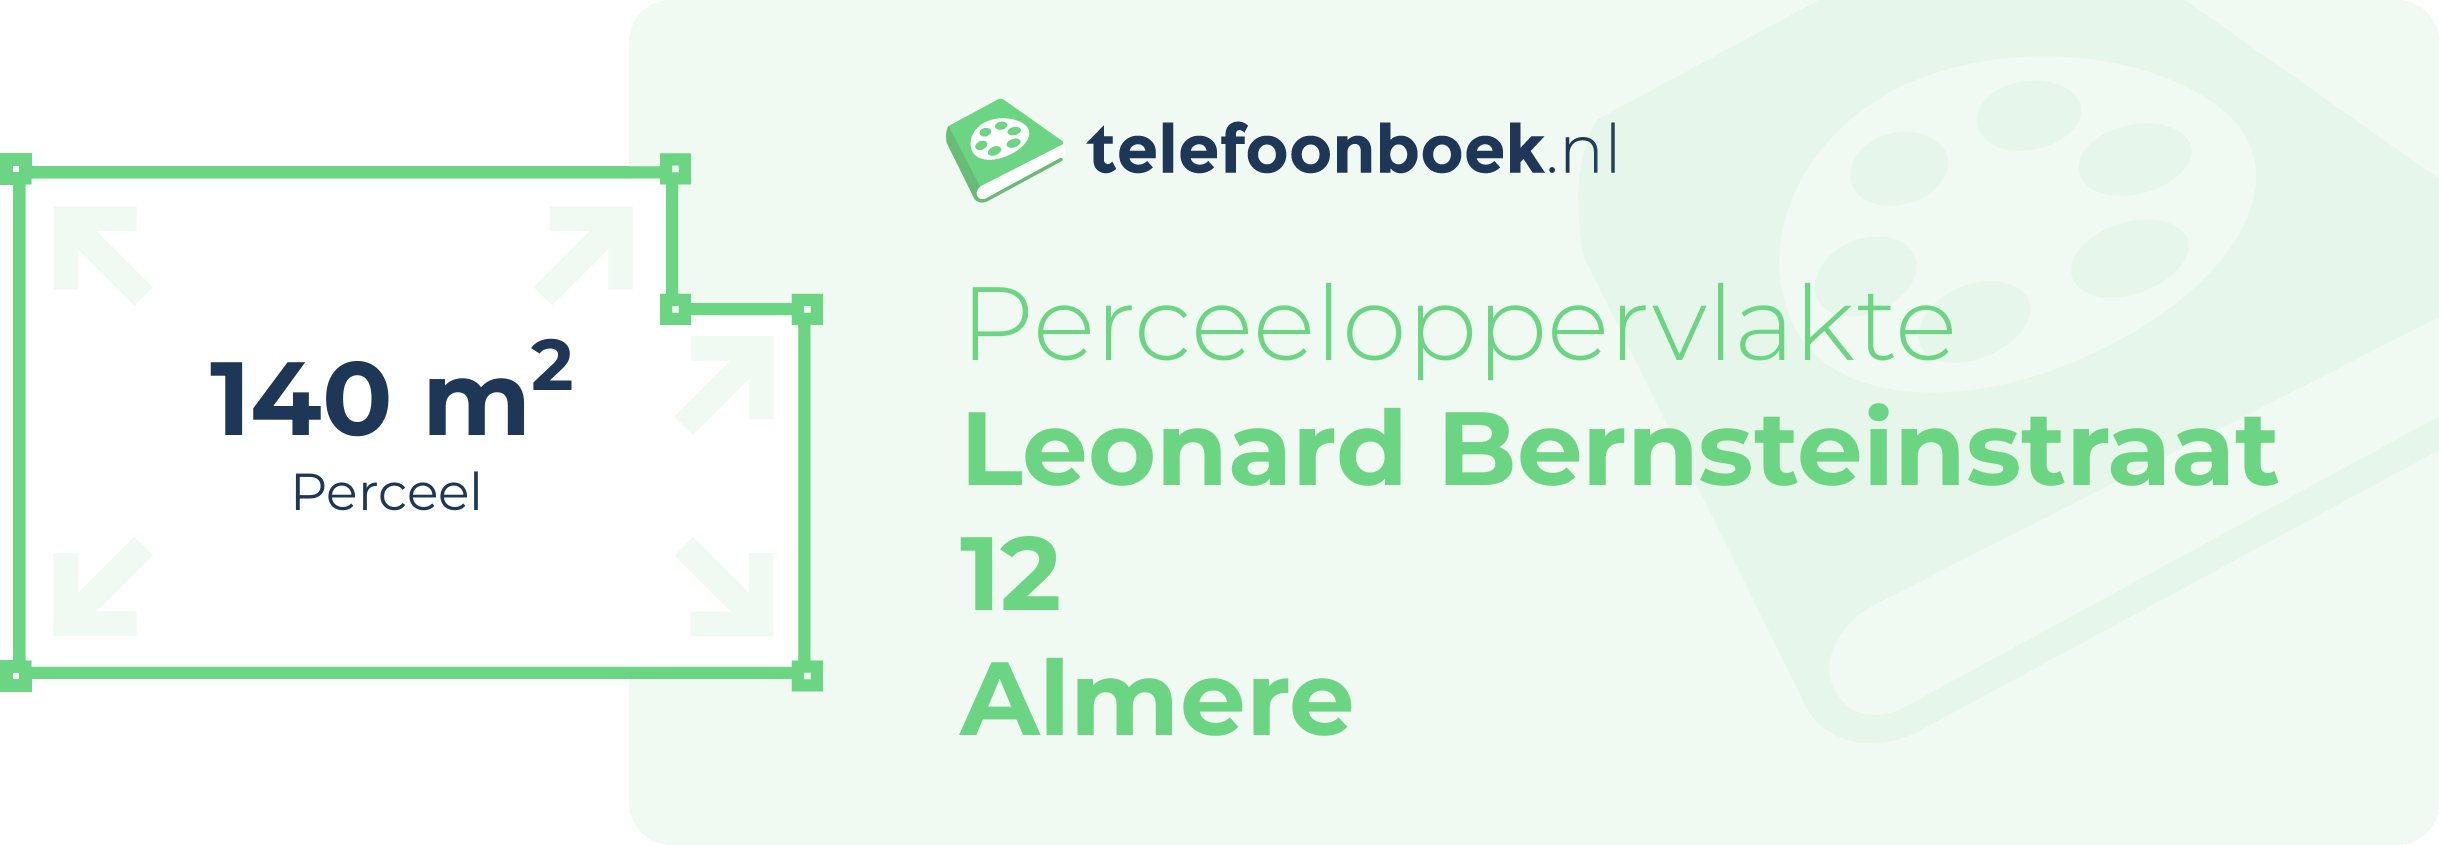 Perceeloppervlakte Leonard Bernsteinstraat 12 Almere